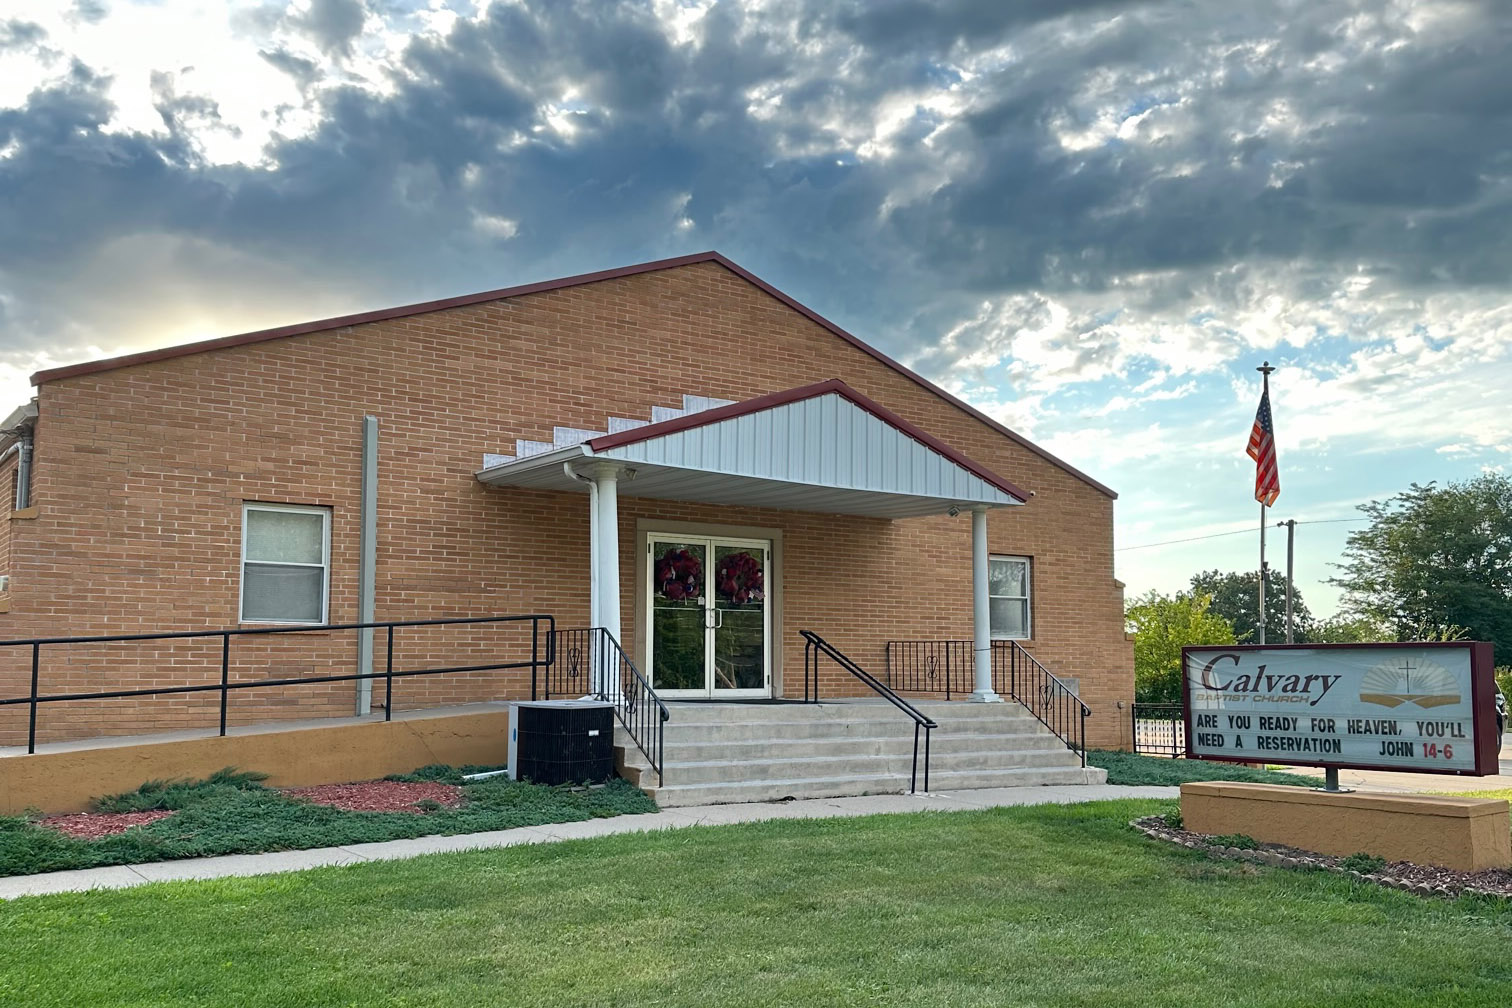 Calvary Baptist Church [Full Photo]